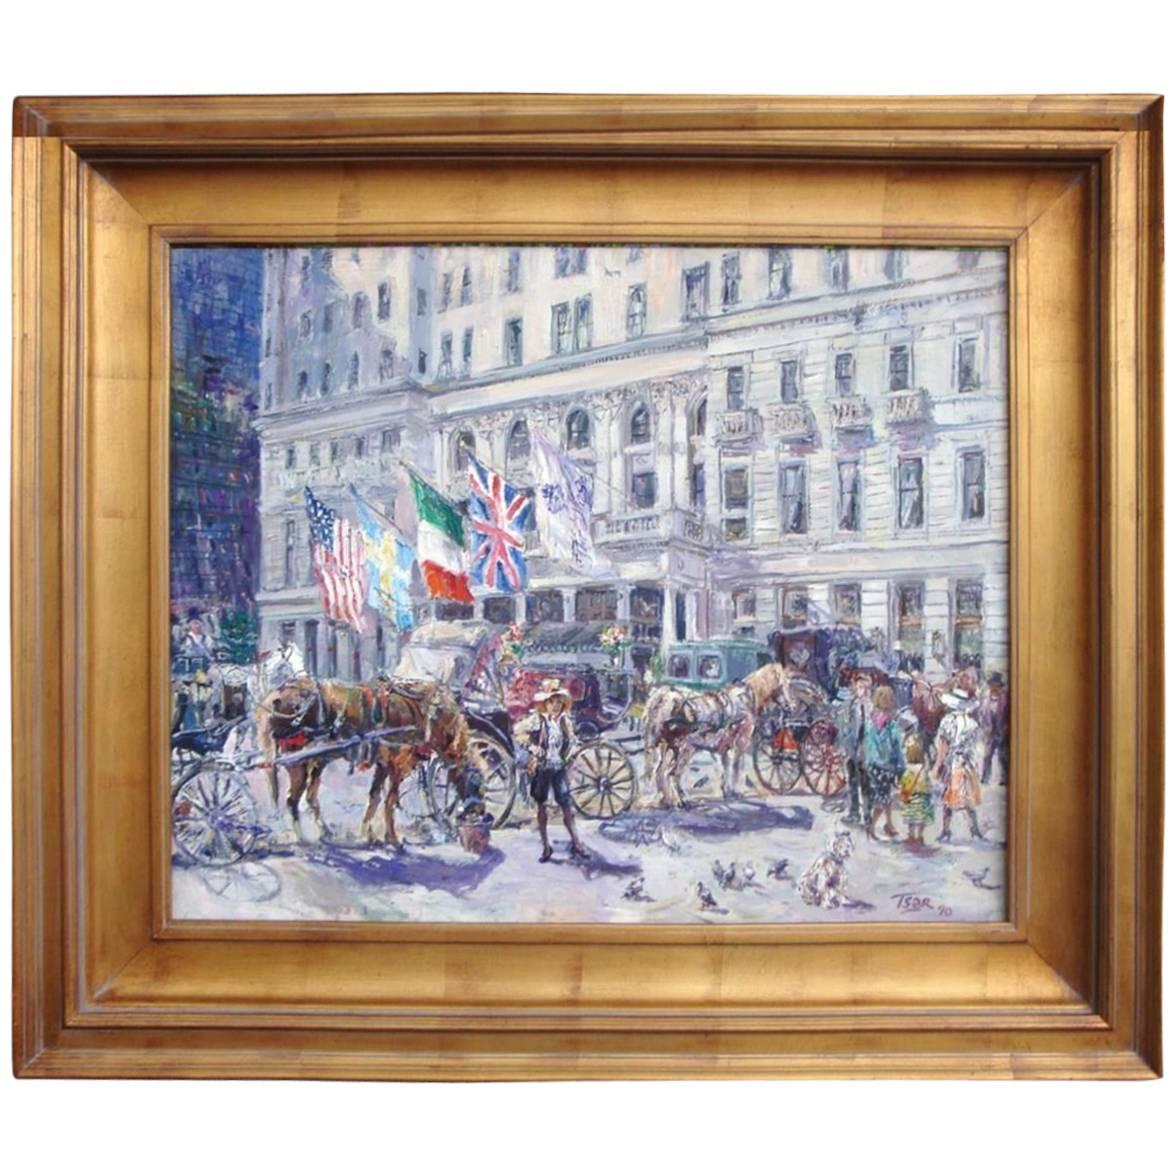 Framed Original New York Plaza Hotel Painting Valery Tsar, 1990 For Sale